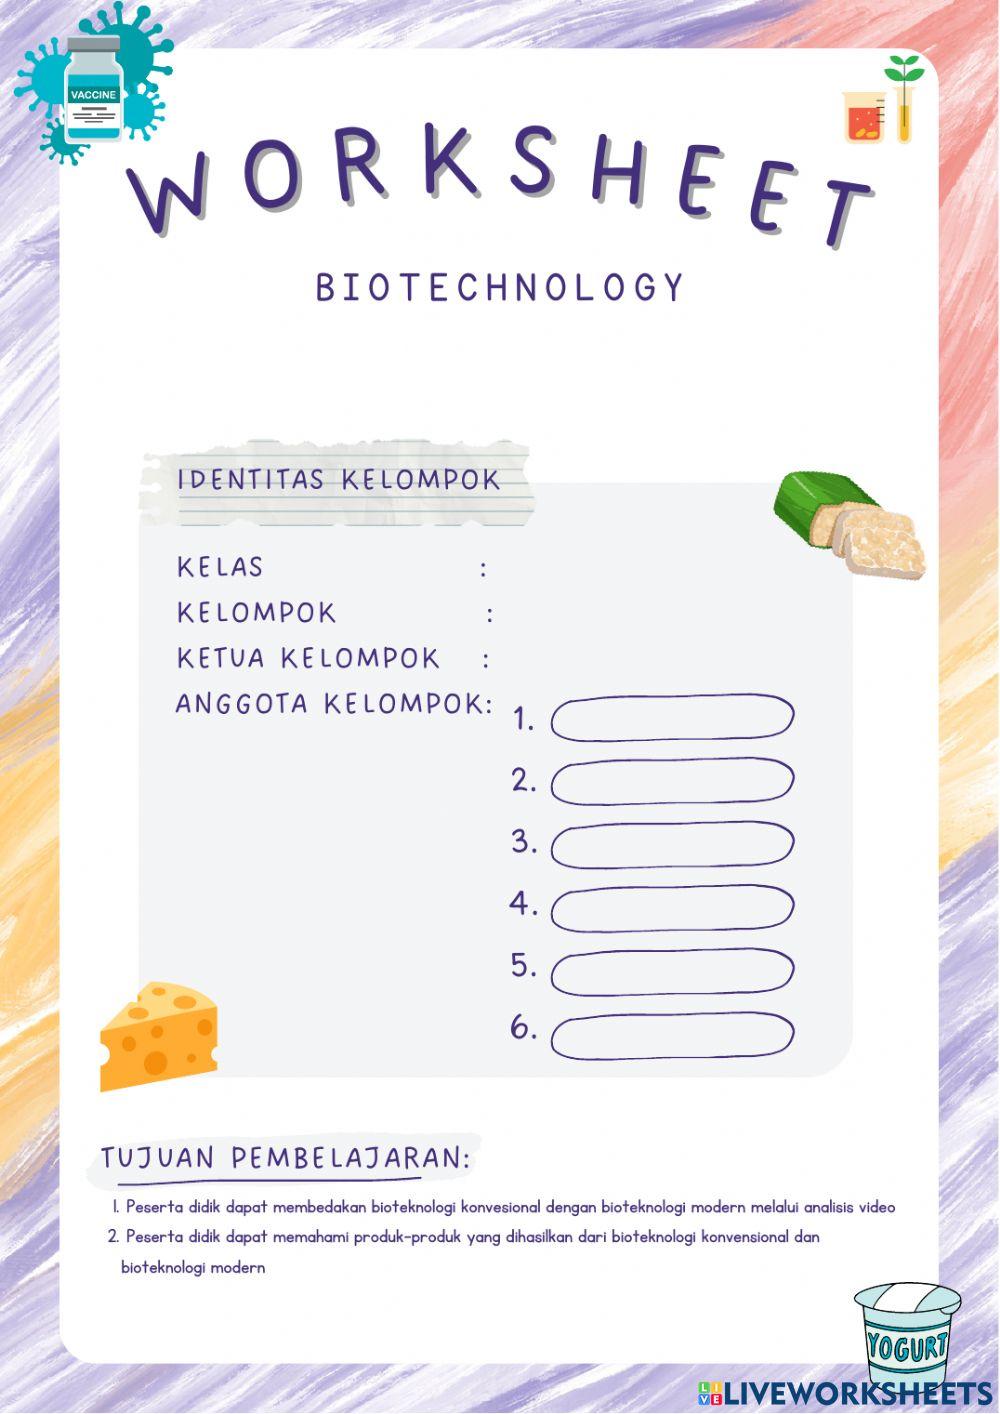 Lkpg bioteknologi